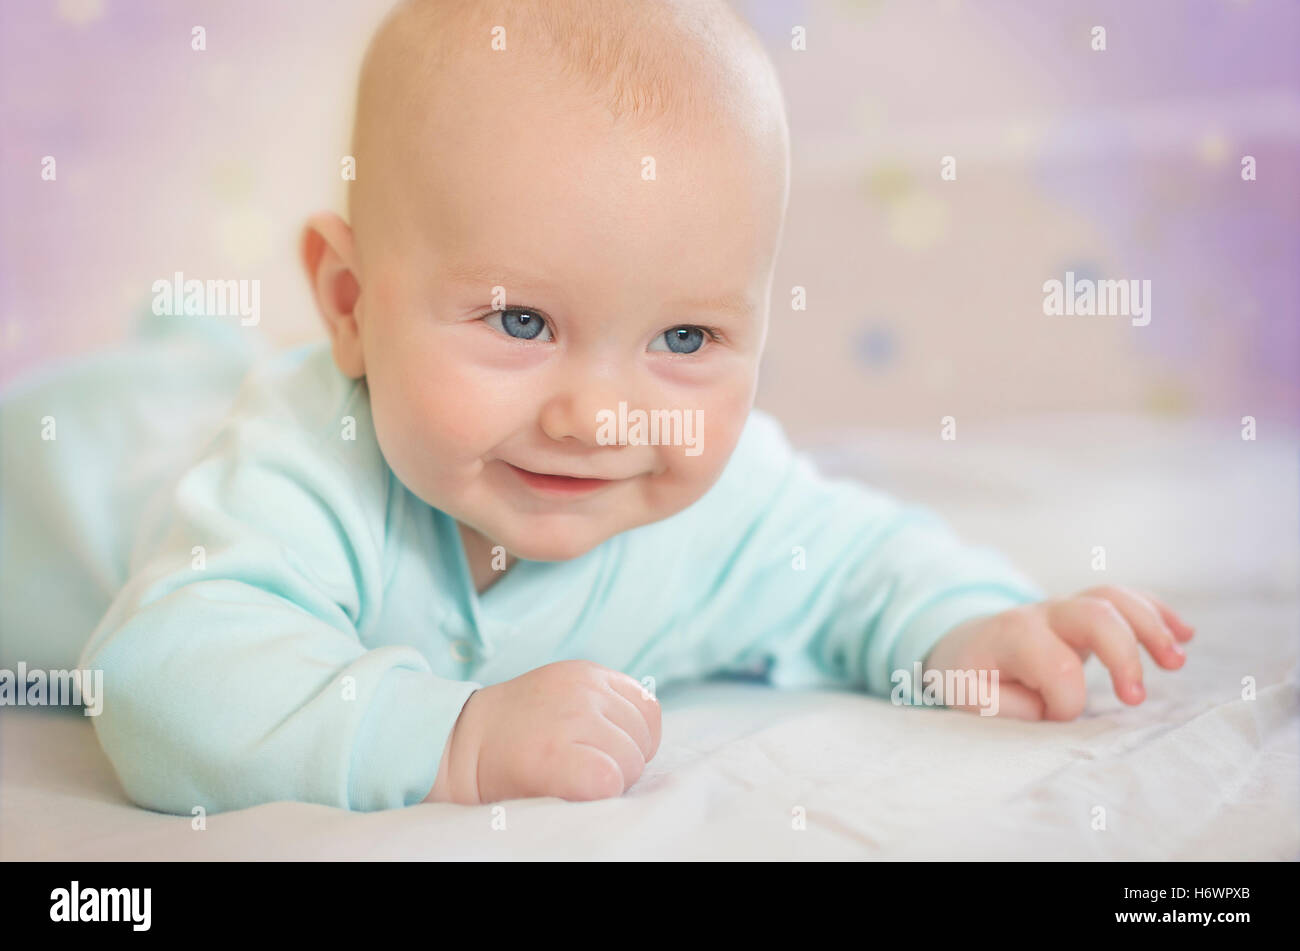 Little cute newborn baby child Stock Photo